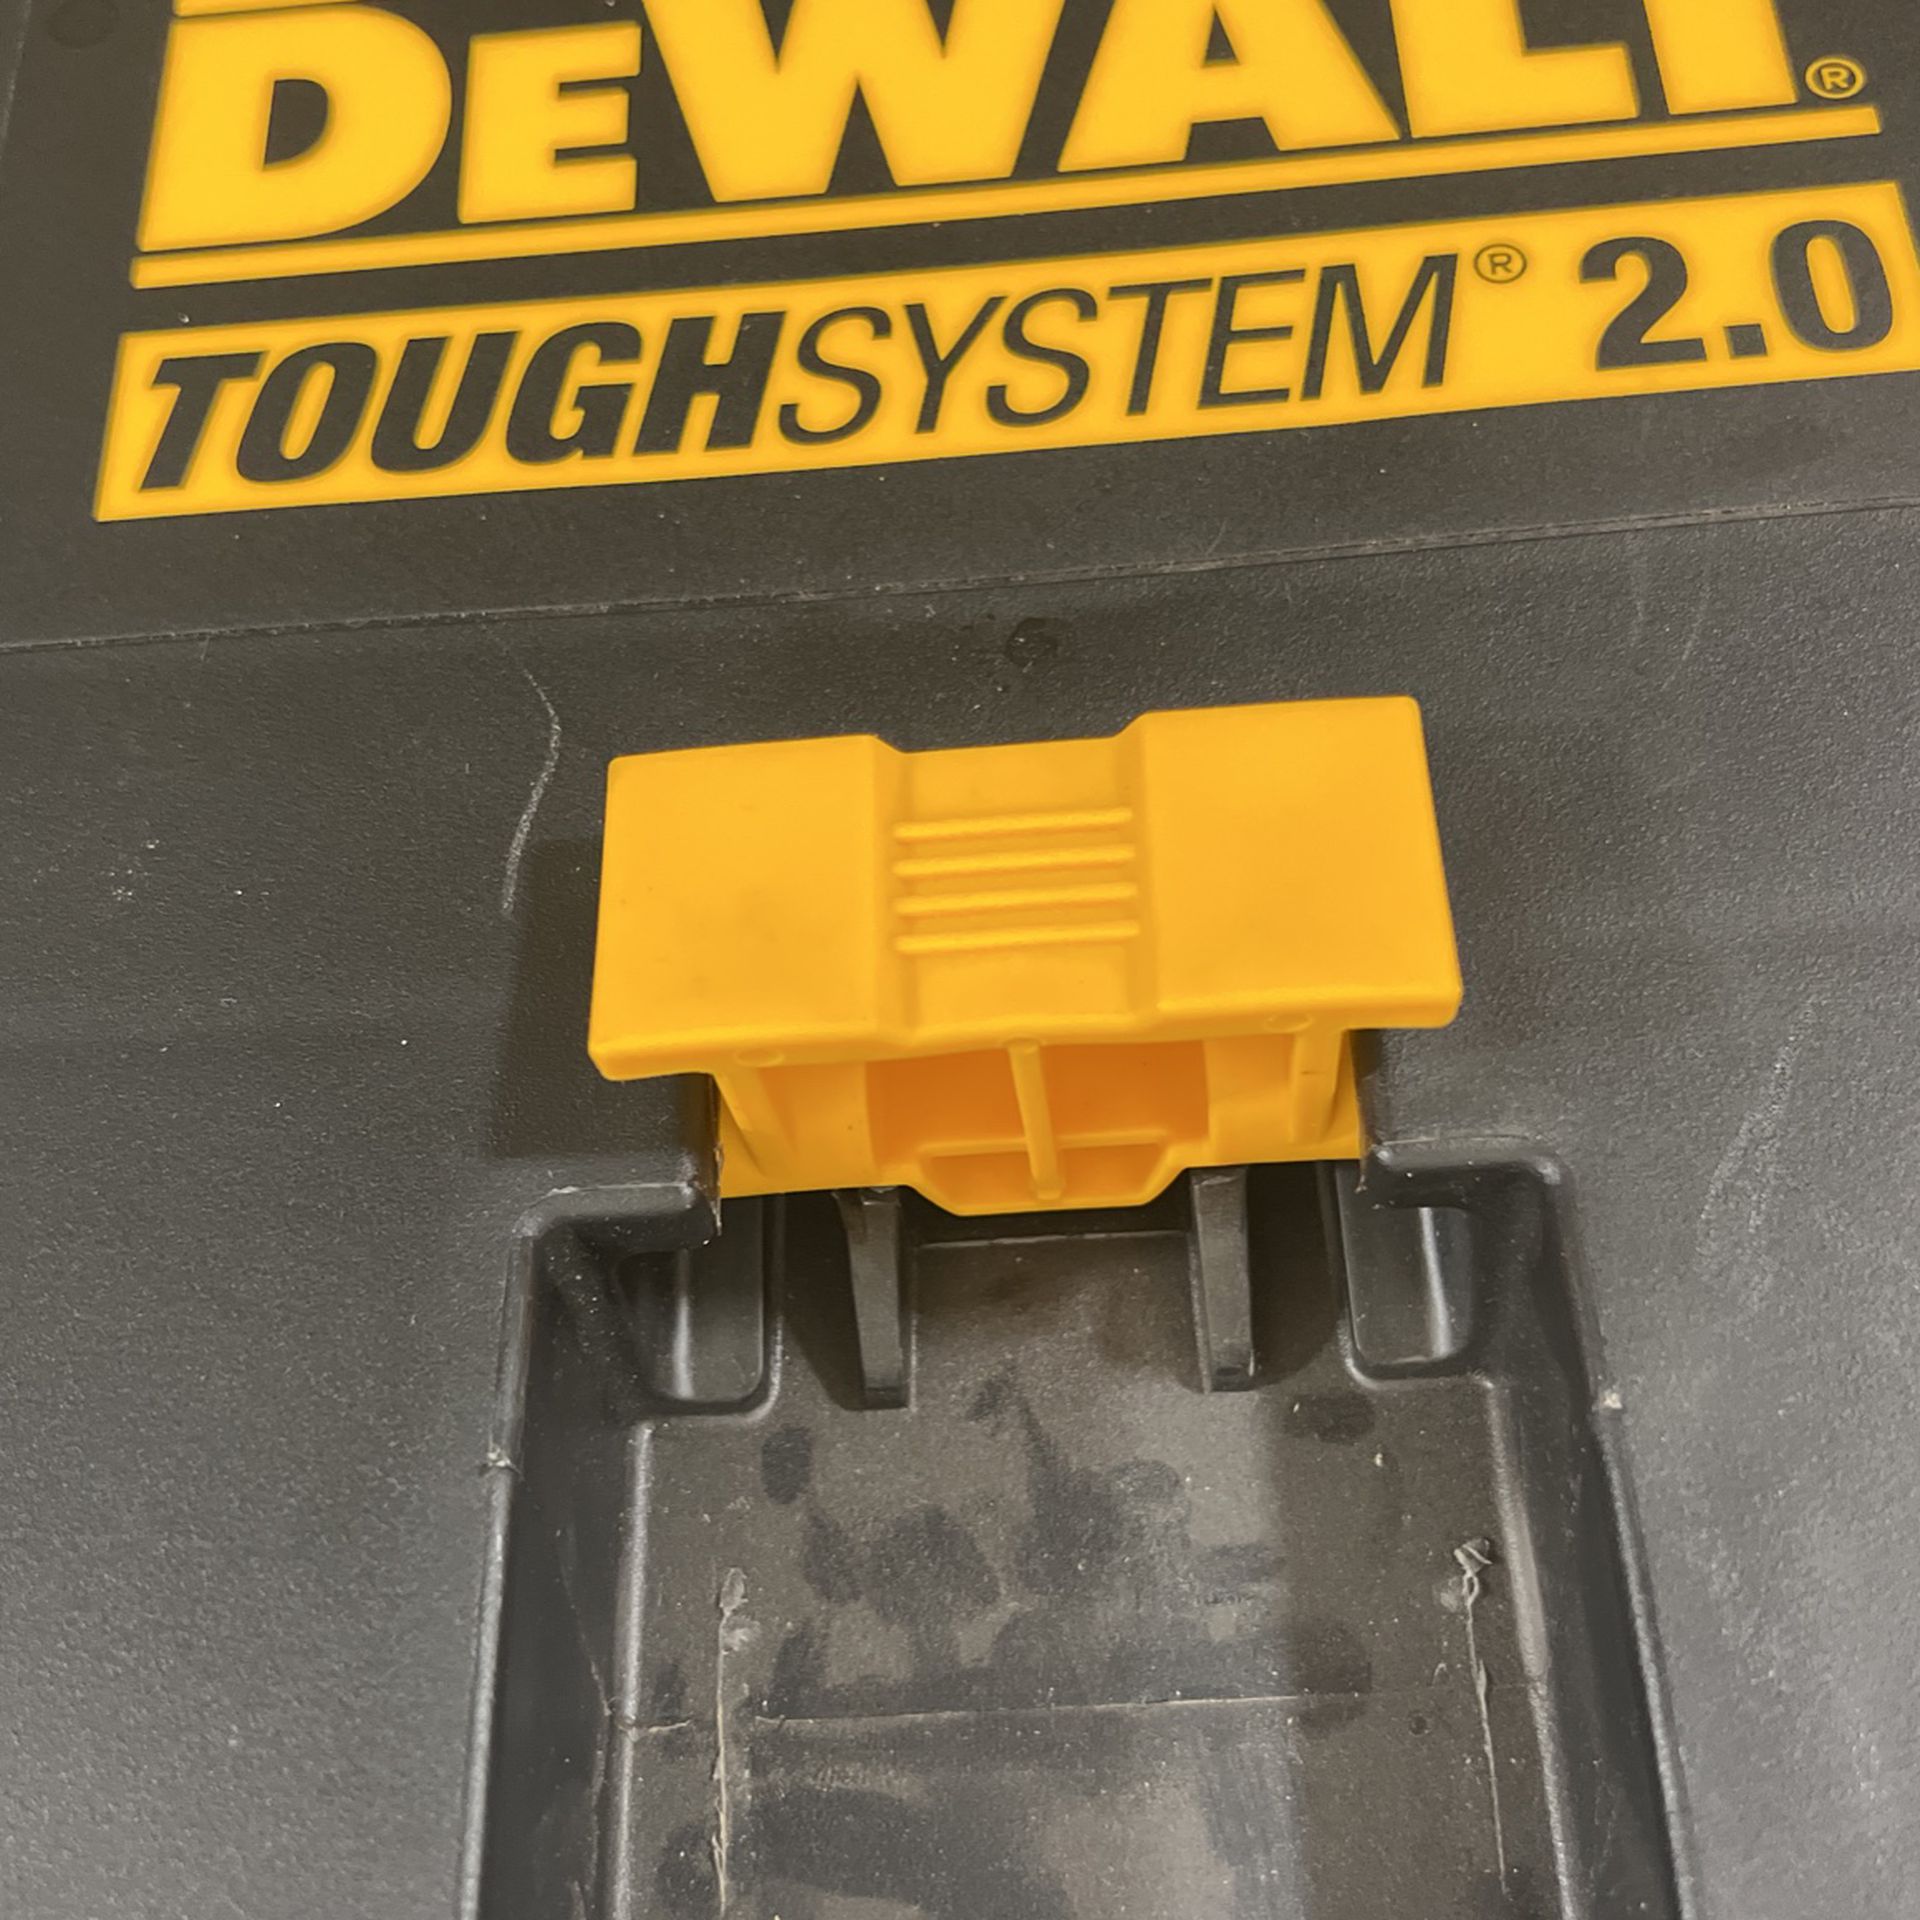 Dewalt tough system 2.0 Took storage lock box